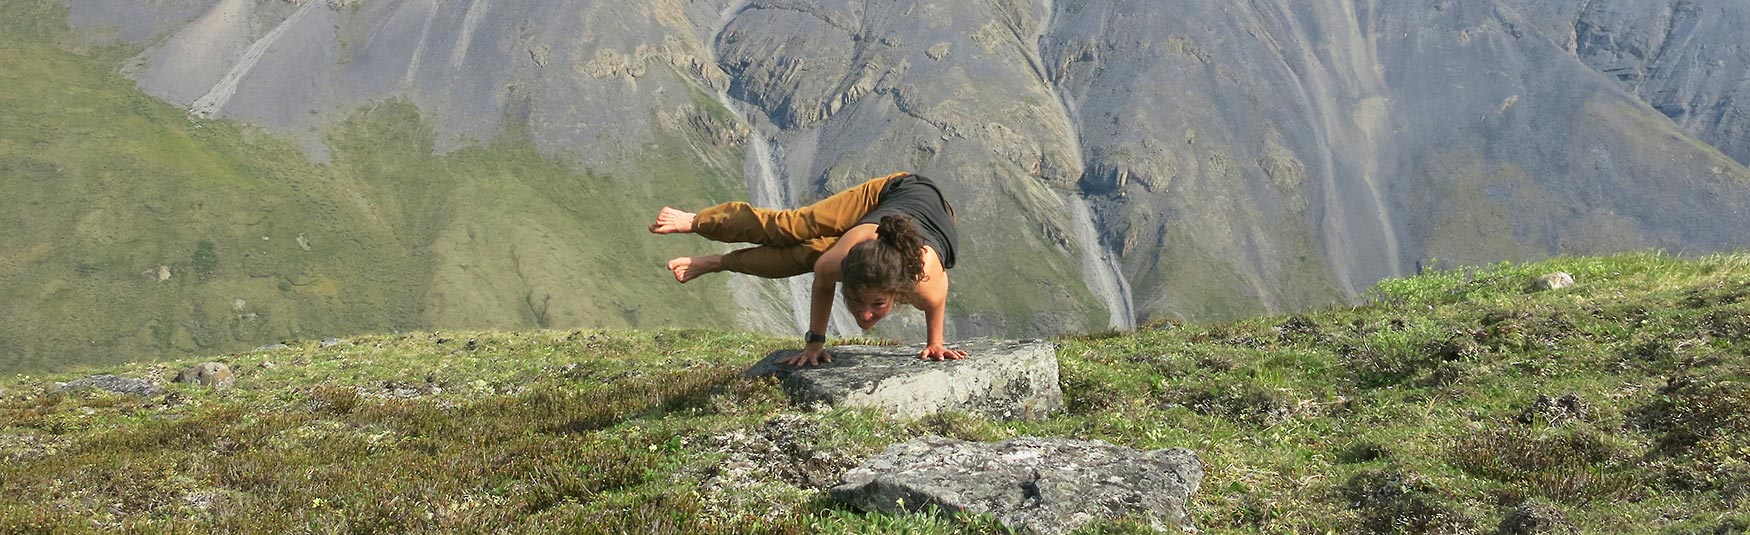 Alaska yoga retreats Wrangell-St. Elias National Park yoga wilderness adventures.